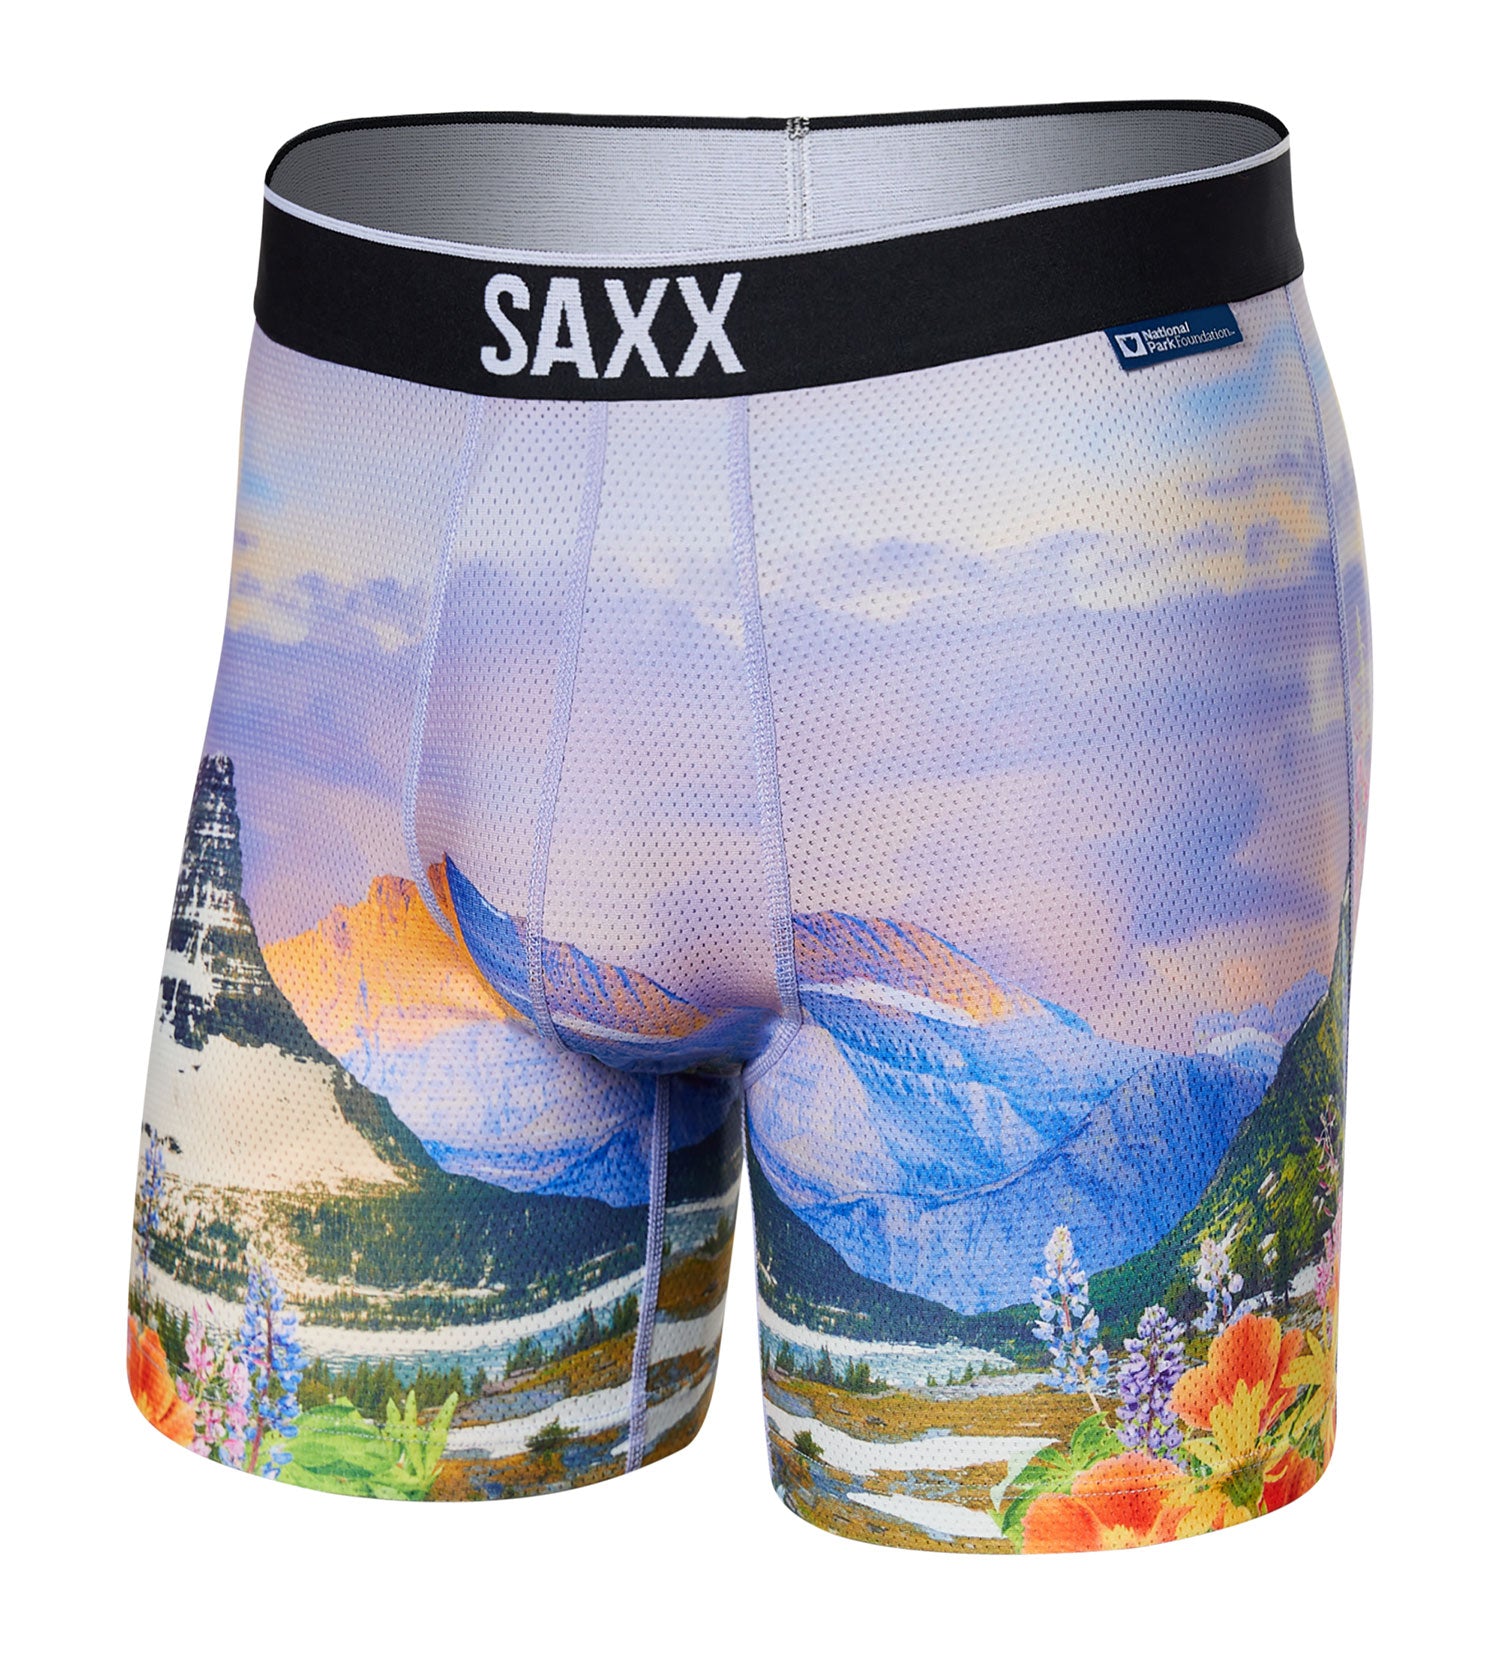 Saxx Men's Underwear: Sale, Clearance & Outlet